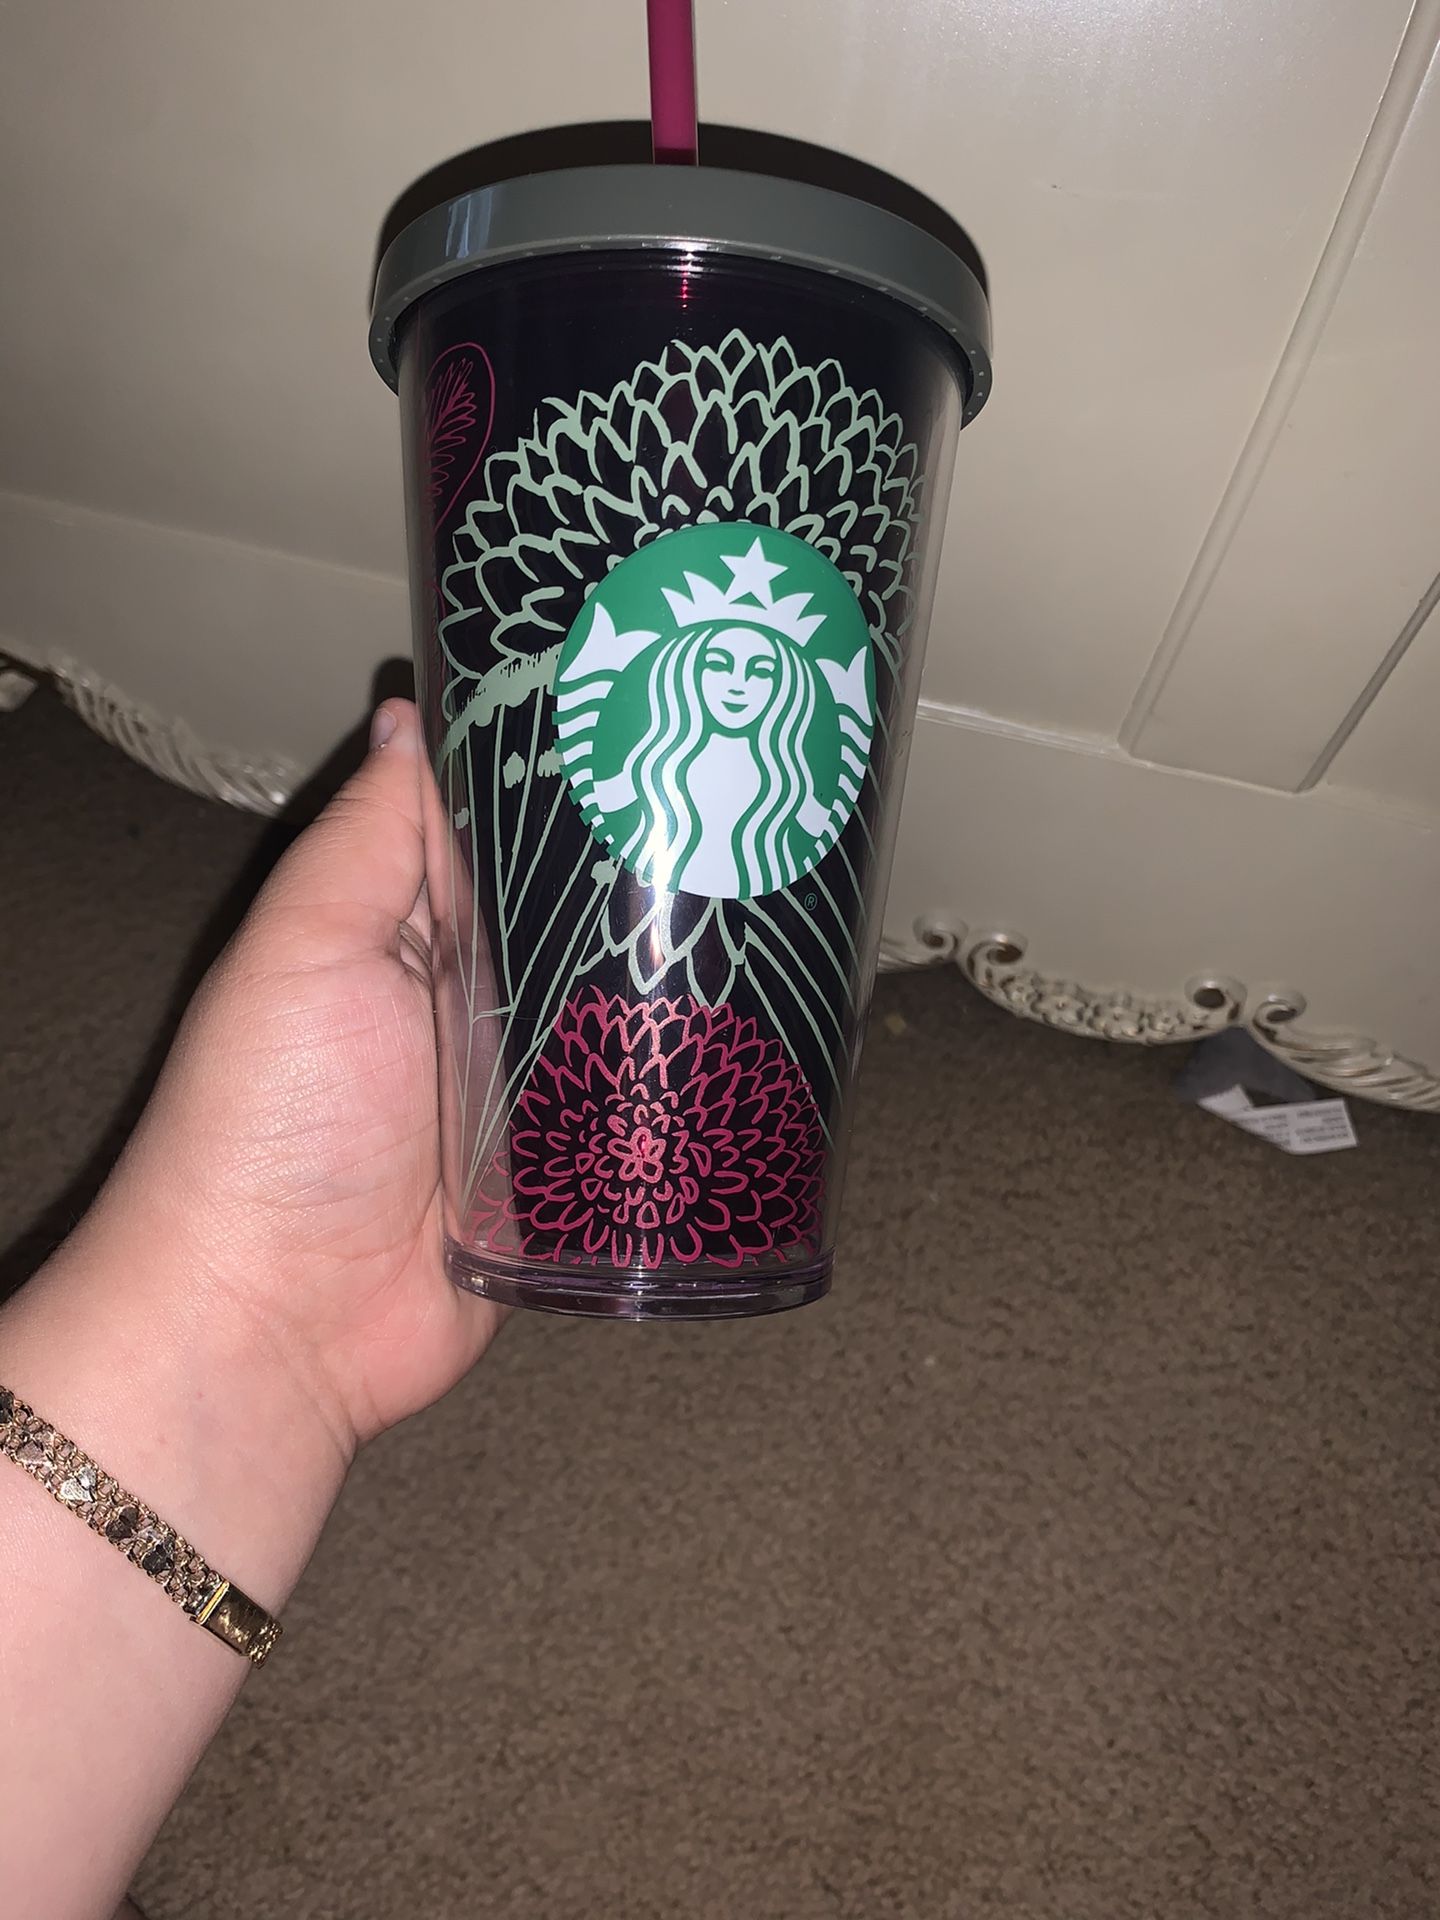 Grande Starbucks cup